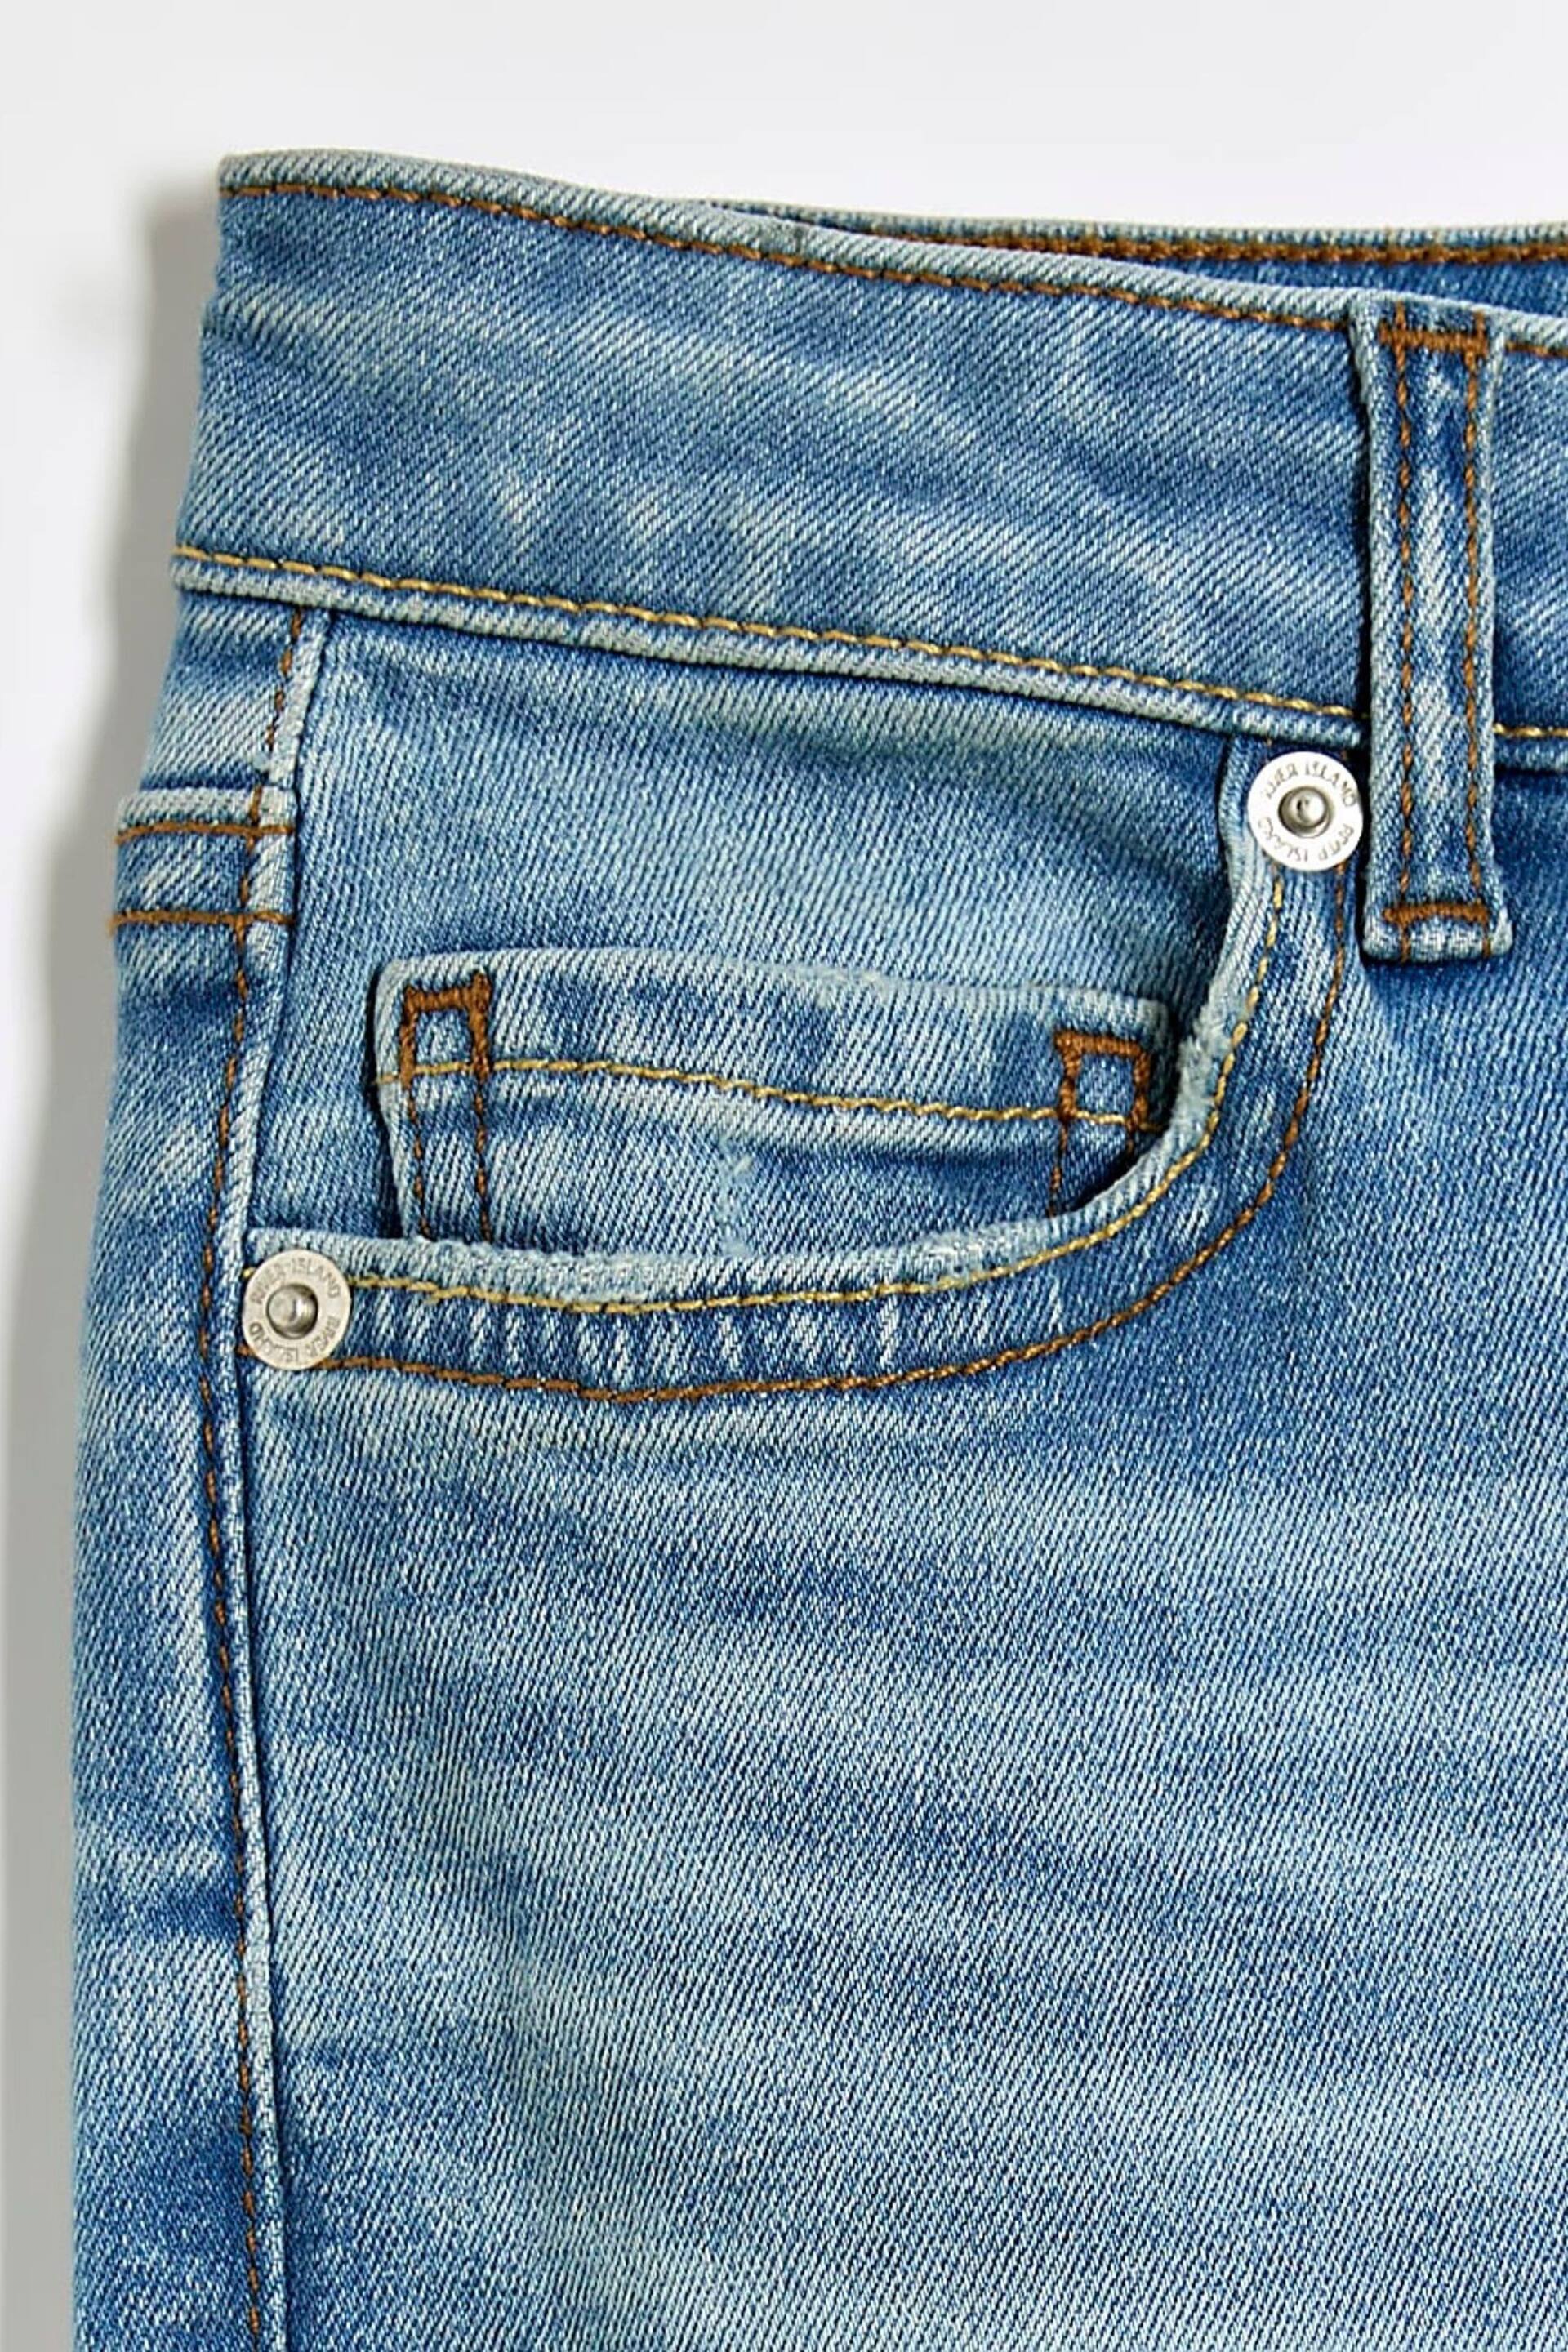 River Island Blue Boys Denim Mid Wash Jeans - Image 6 of 6